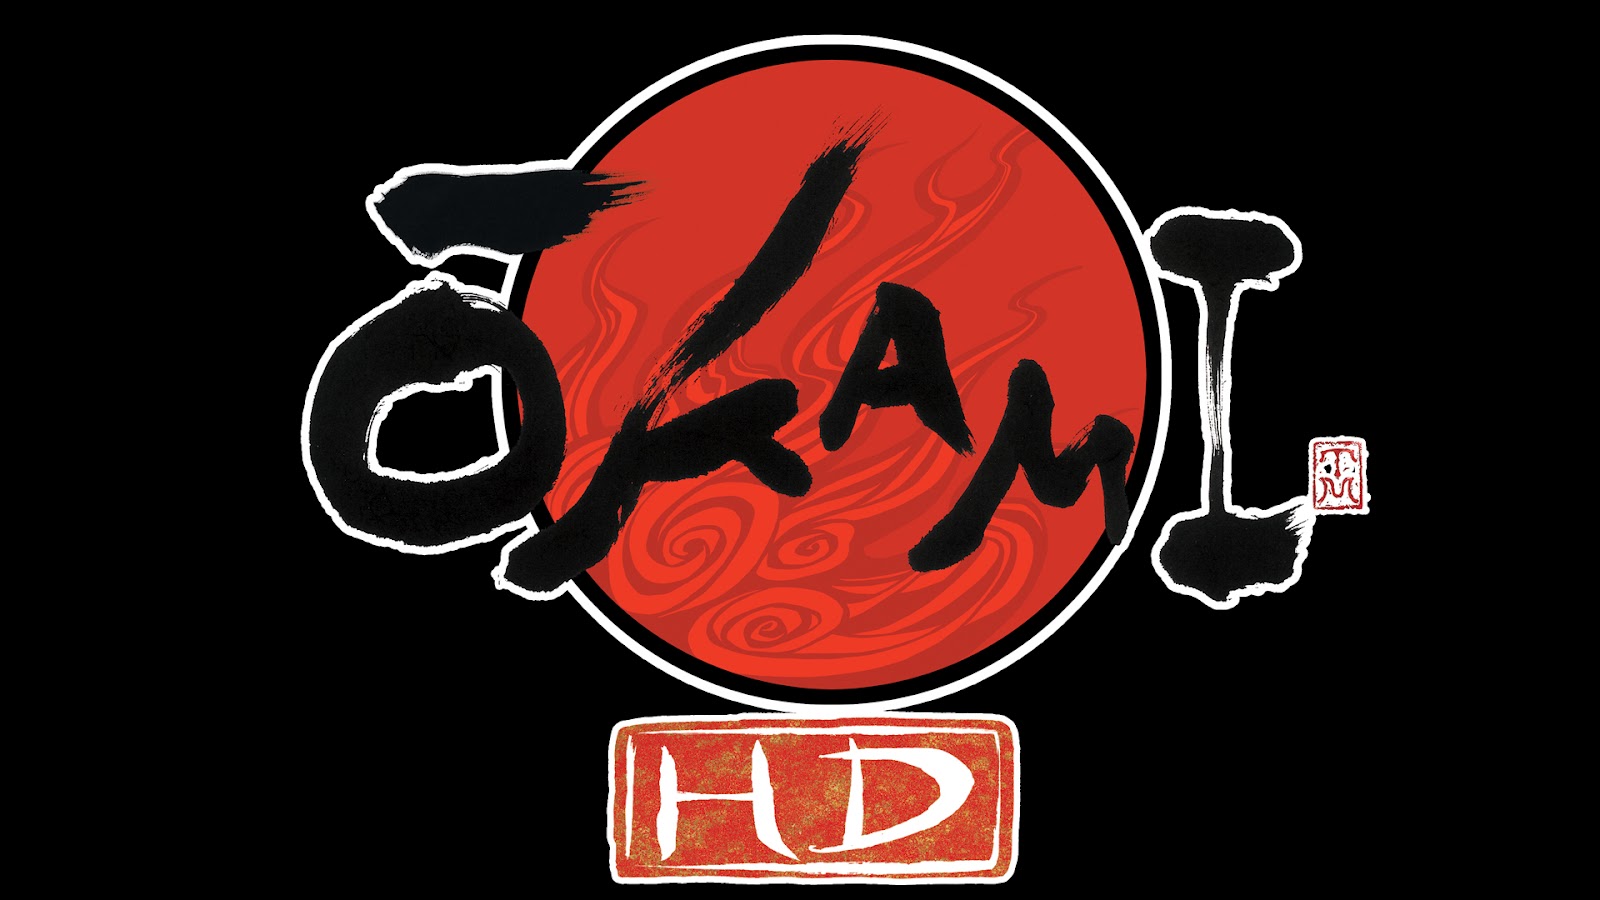 Okami HD' Gets Some Fantastic New Trailers